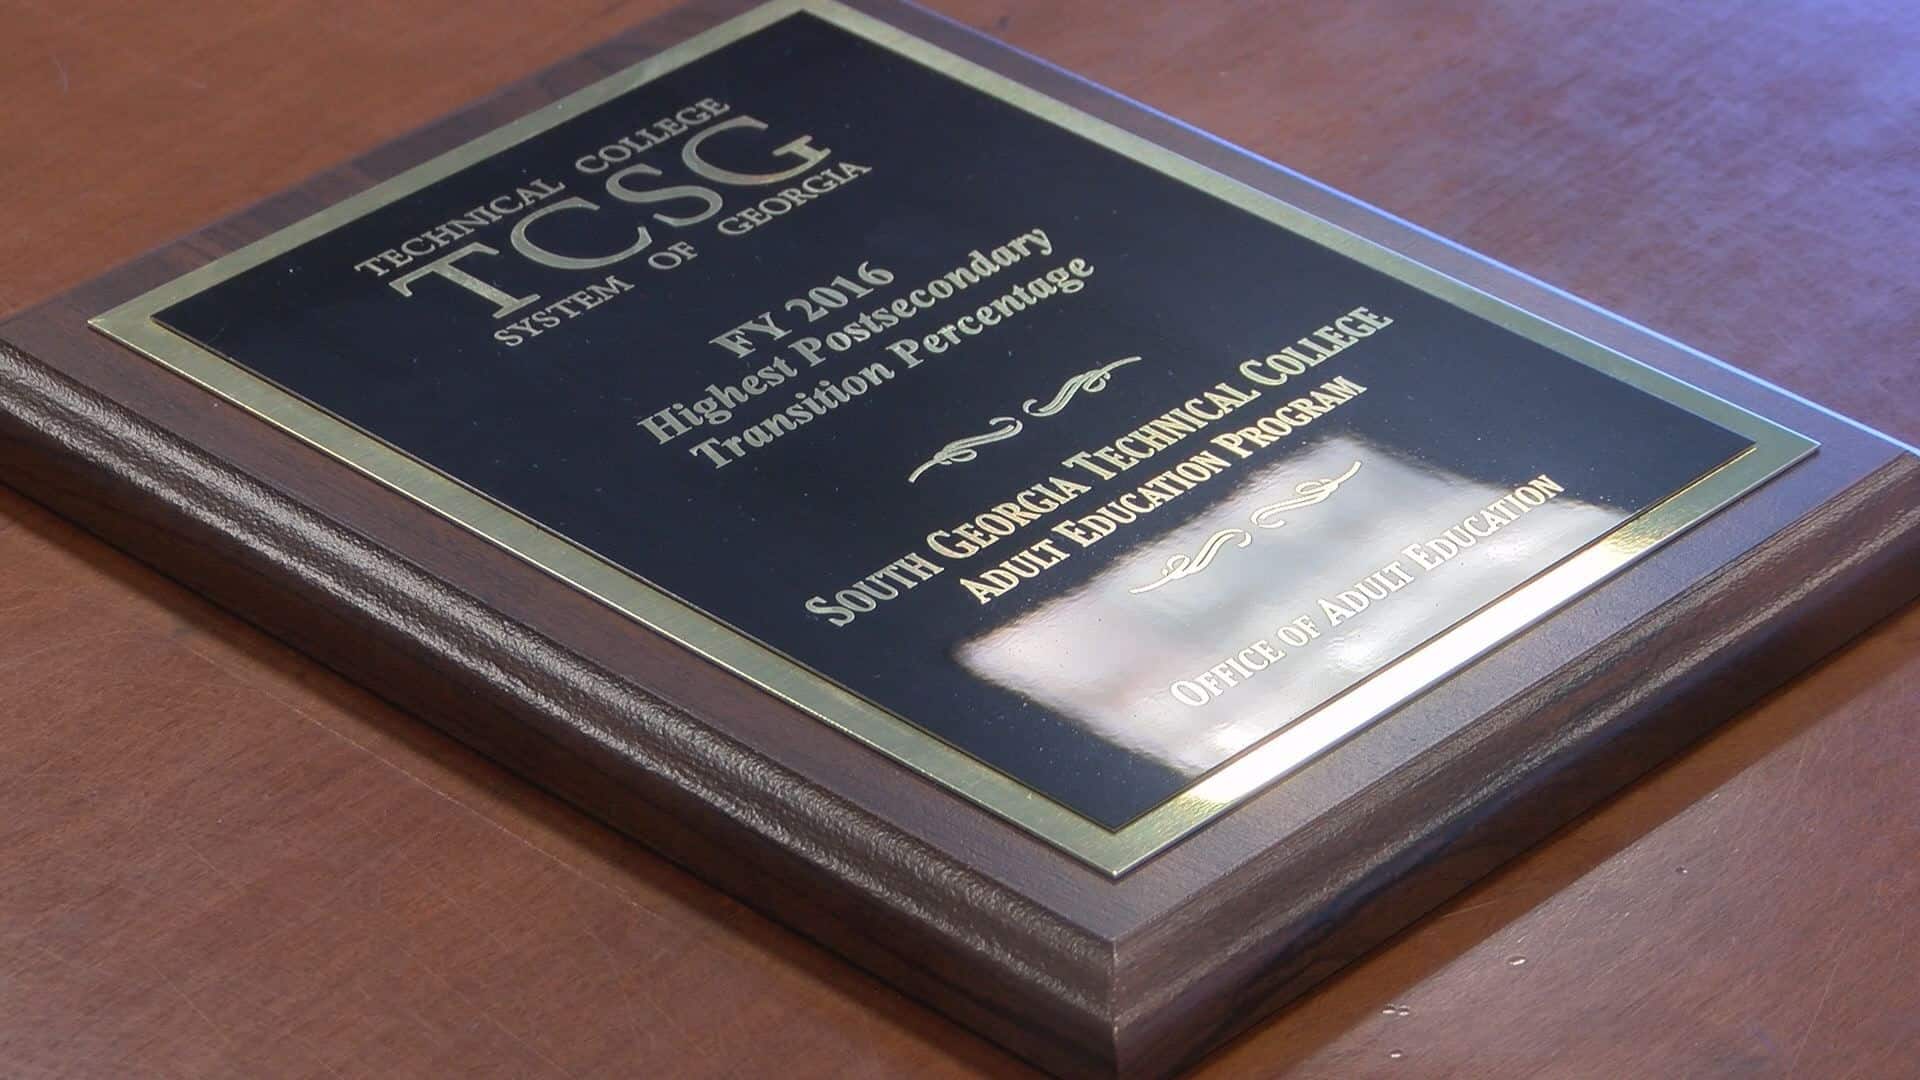 The award recognizes SGTC adult education accomplishments.